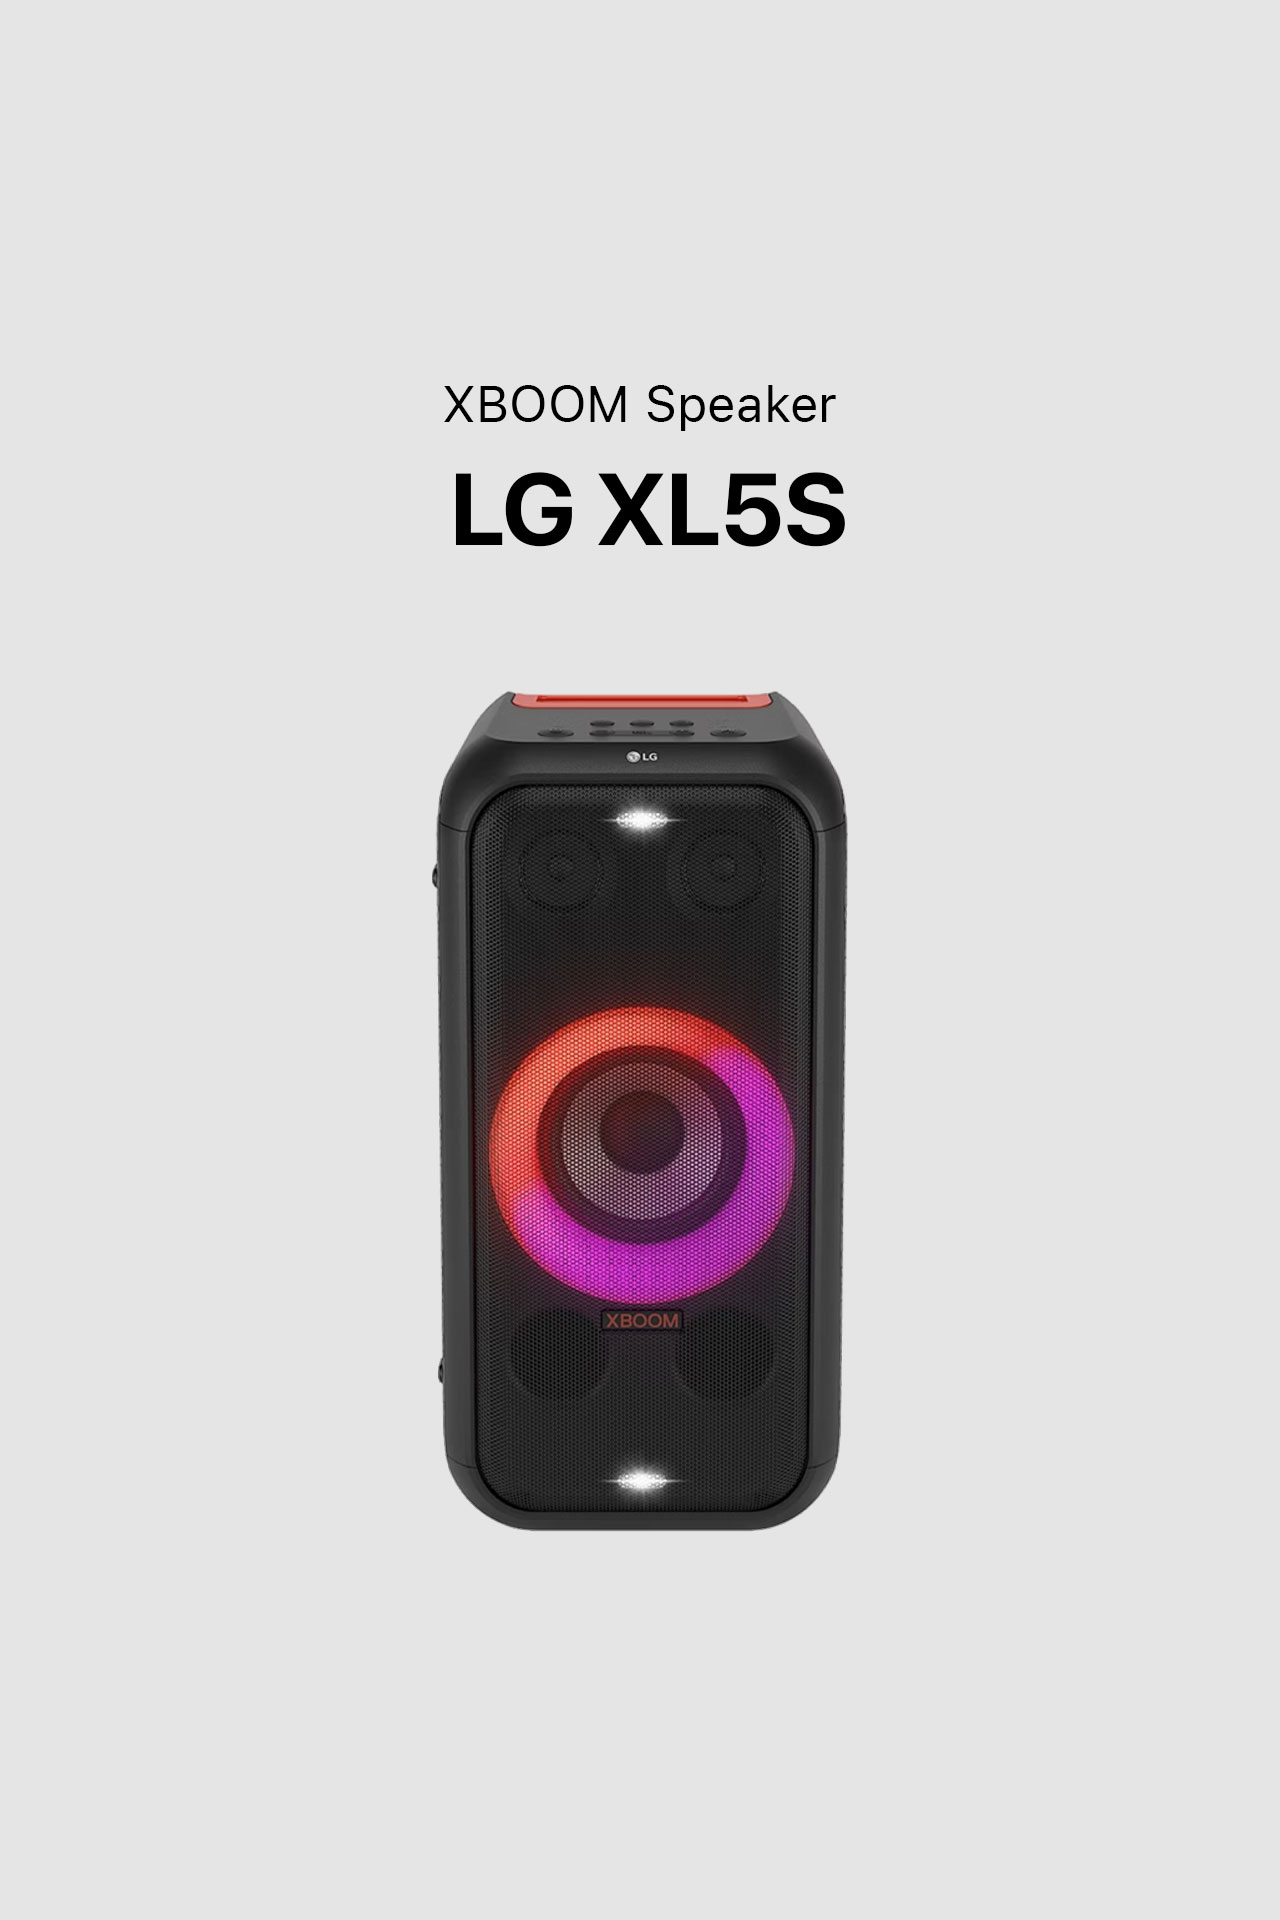 25. [Employee Sale] LG XL5S XBOOM Speaker | Memoxpress Online